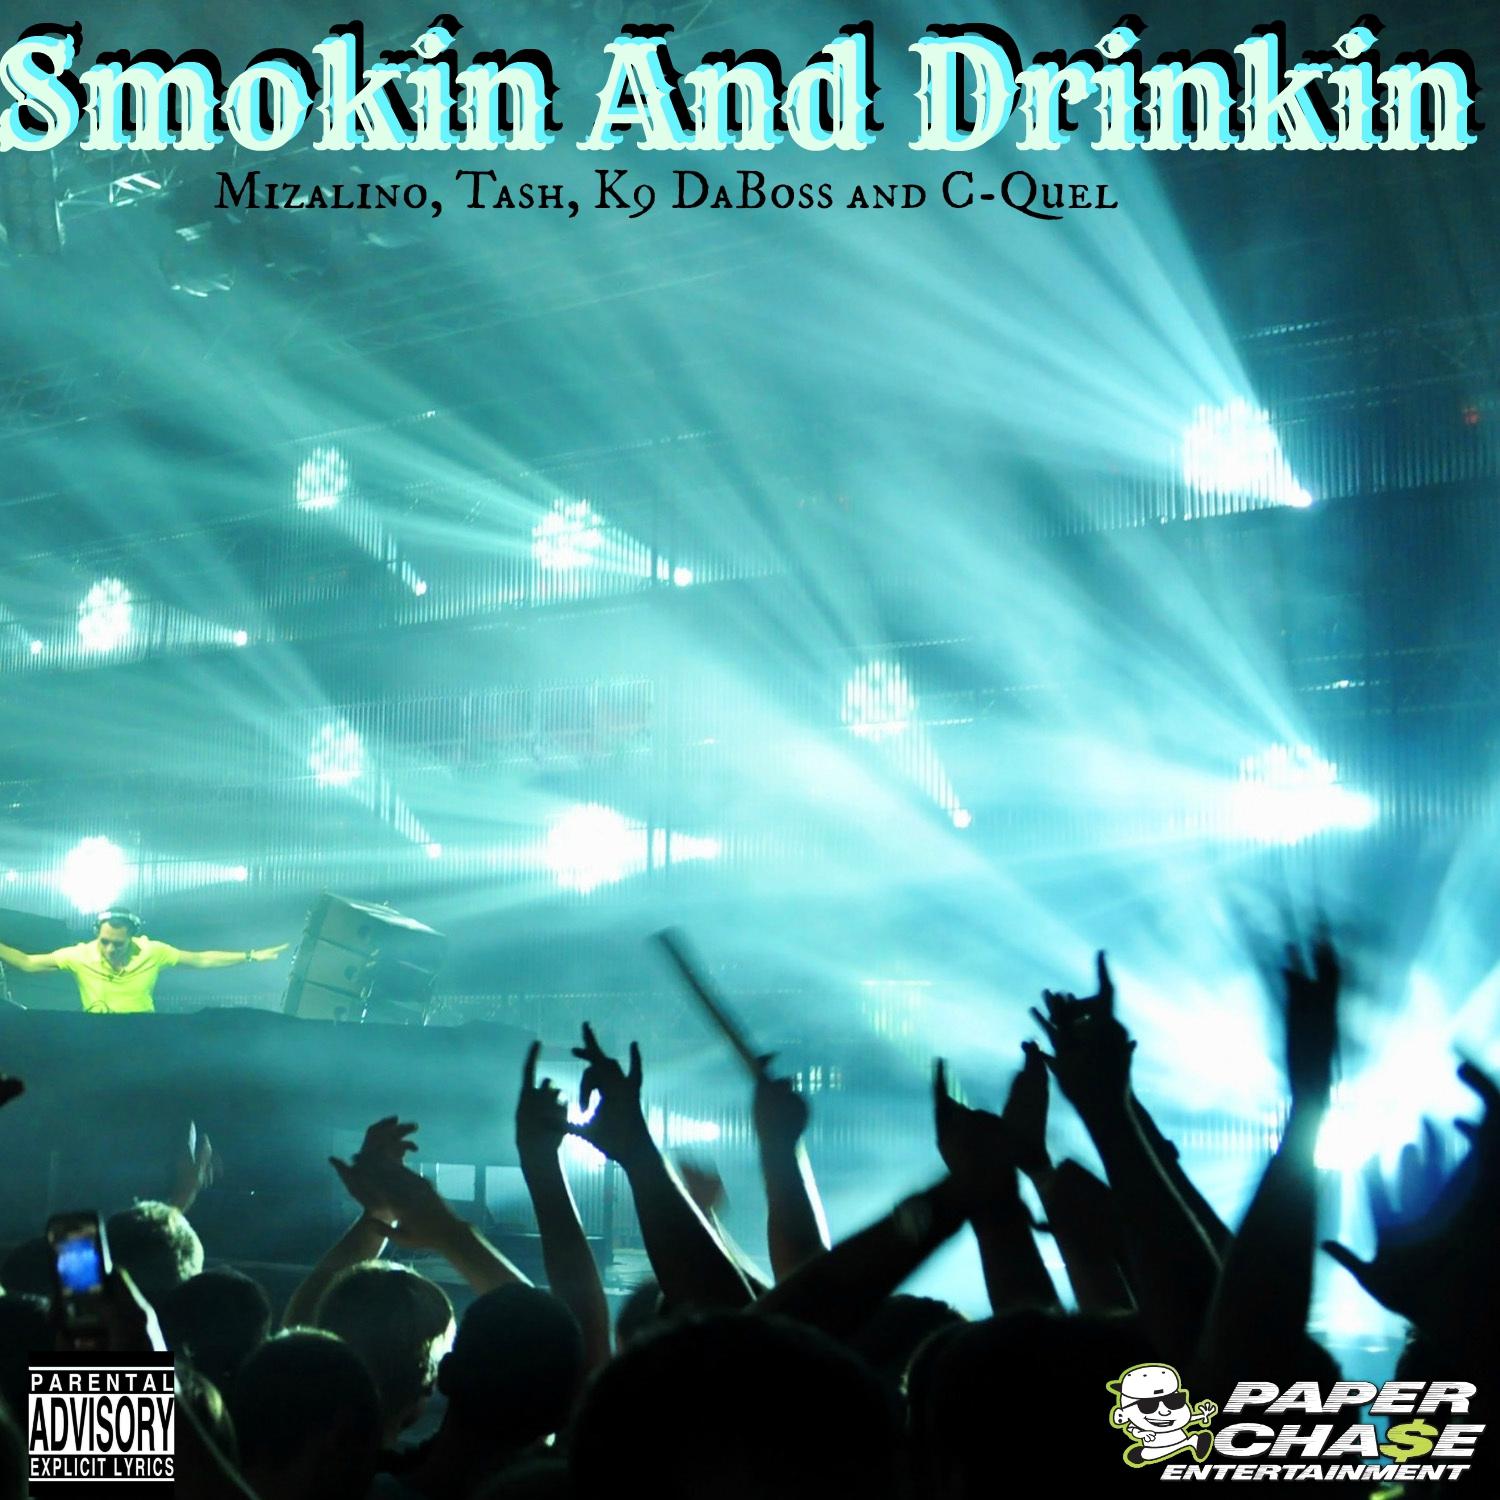 Smokin And Drinkin